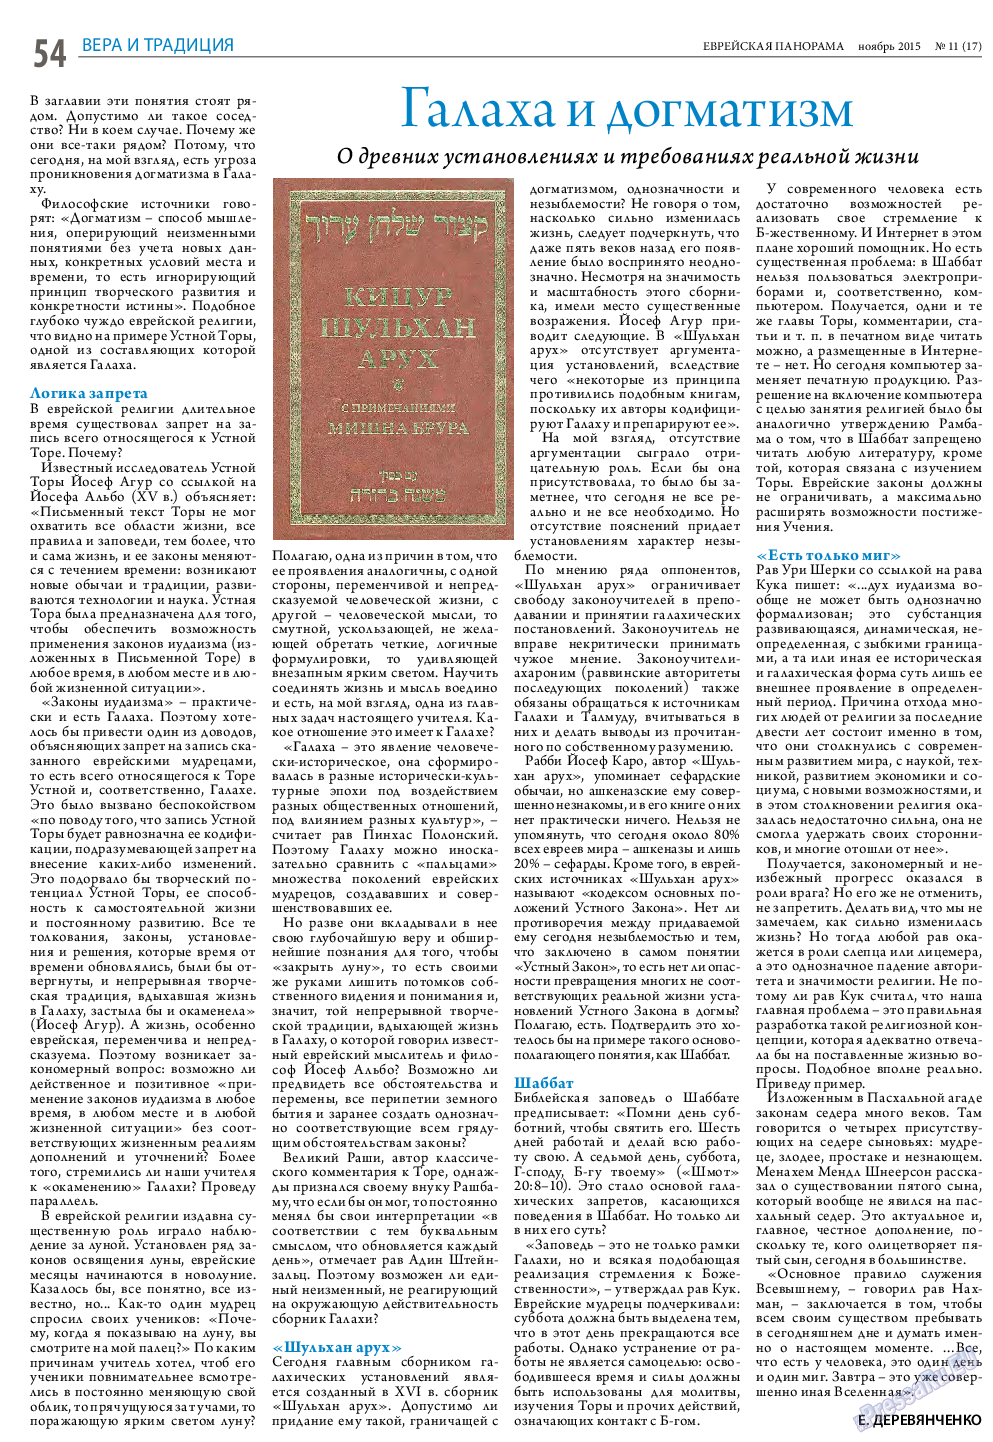 Еврейская панорама, газета. 2015 №11 стр.54